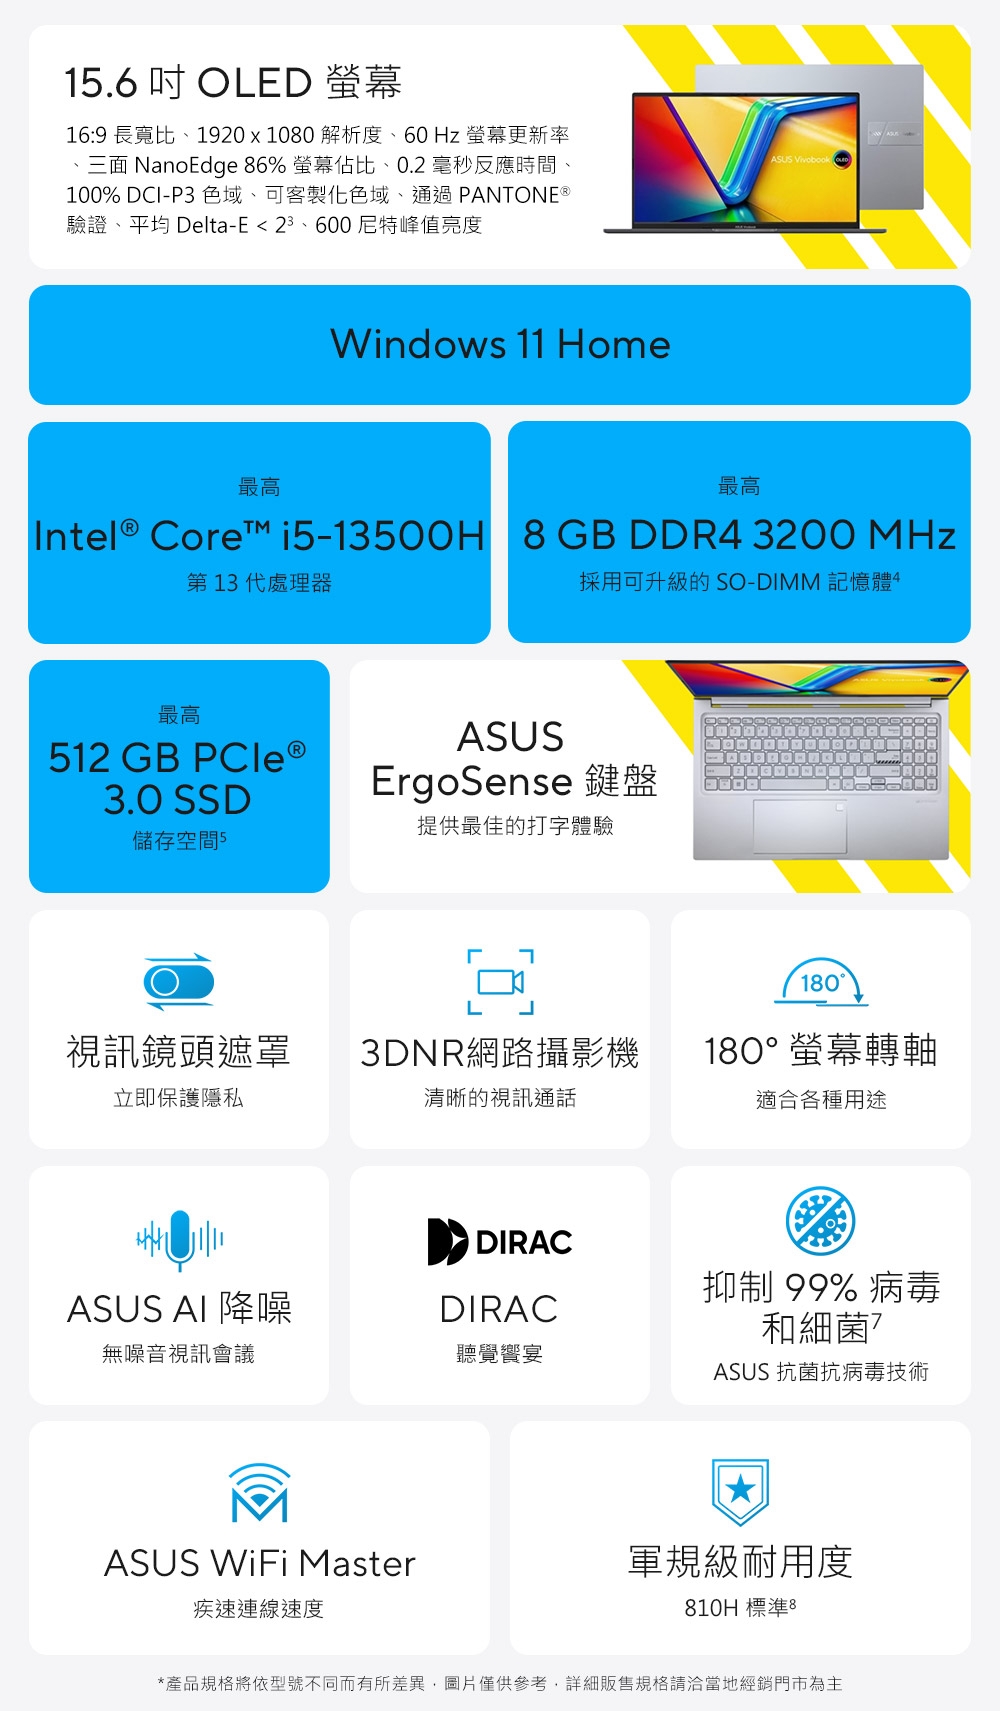 1.6OLED 螢幕16:9 長寬比1920x1080 解析度、60Hz螢幕更新率、三面 NanoEdge 86% 螢幕佔比、0.2 毫秒反應時間、100% DCI-P3 色域、可客製化色域、通過PANTONE 驗證、平均 Delta-E< 23、600尼特峰值亮度Windows 11 HomeASUS Vivobook最高最高Intel® Core™ i5-13500H 8GB DDR4 3200 MHz第13代處理器採用可升級的 SO-DIMM 記憶體最高512 GB PCle®3.0 SSD儲存空間 5ASUSErgoSense 鍵盤提供最佳的打字體驗180視訊鏡頭遮罩立即保護隱私3DNR網路攝影機清晰的視訊通話180°螢幕轉軸適合各種用途DIRACASUS AI 降噪抑制 99% 病毒DIRAC和細菌無噪音視訊會議聽覺宴ASUS 抗菌抗病毒技術ASUS WiFi Master疾速連線速度軍規級耐用度810H 標準8*產品規格將依型號不同而有所差異圖片僅供參考,詳細販售規格請洽當地經銷門市為主